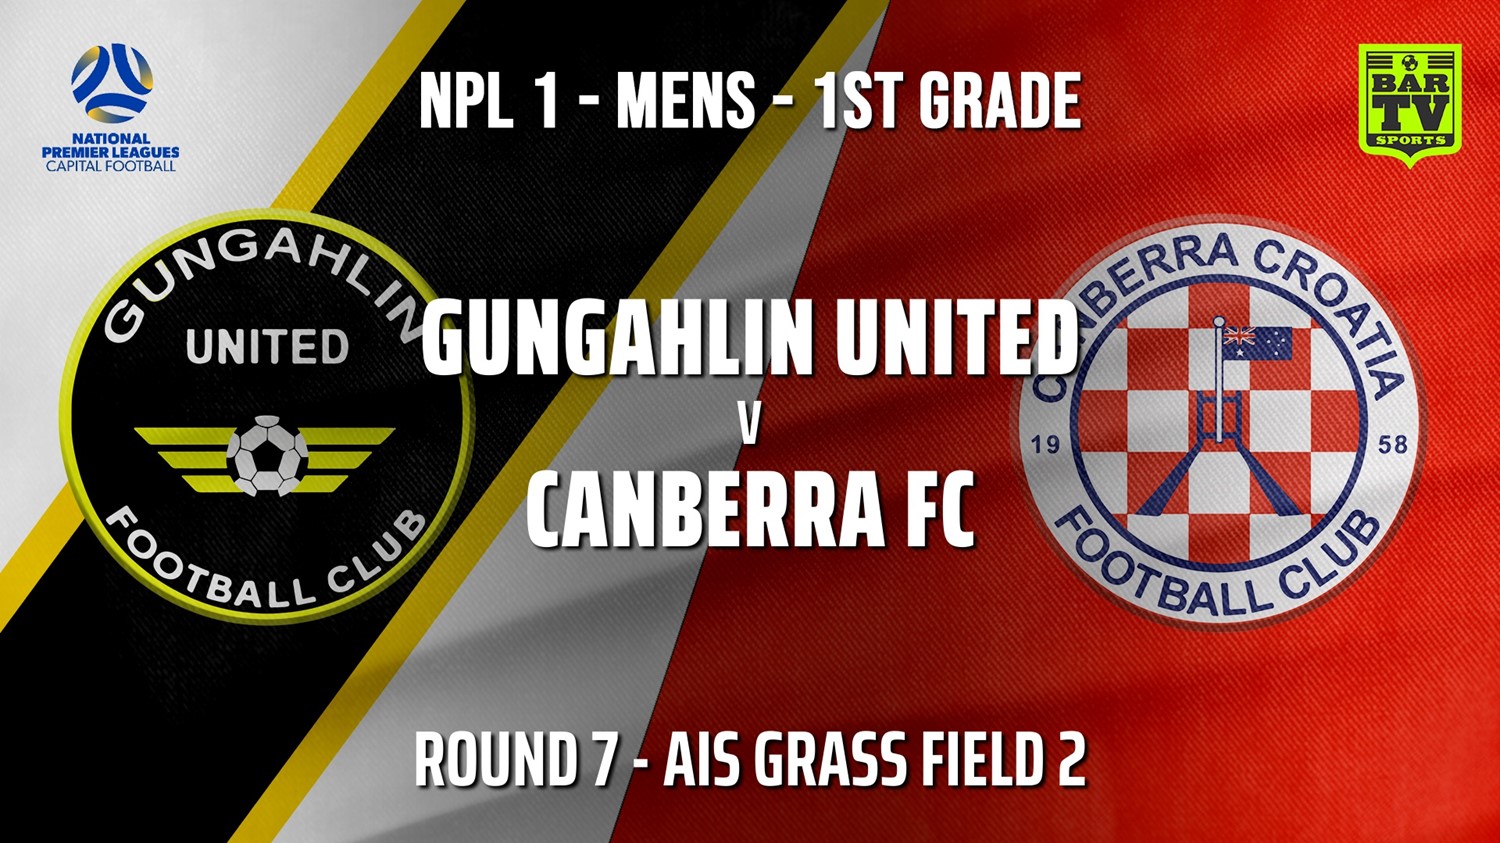 210523-NPL - CAPITAL Round 7 - Gungahlin United FC v Canberra FC Minigame Slate Image